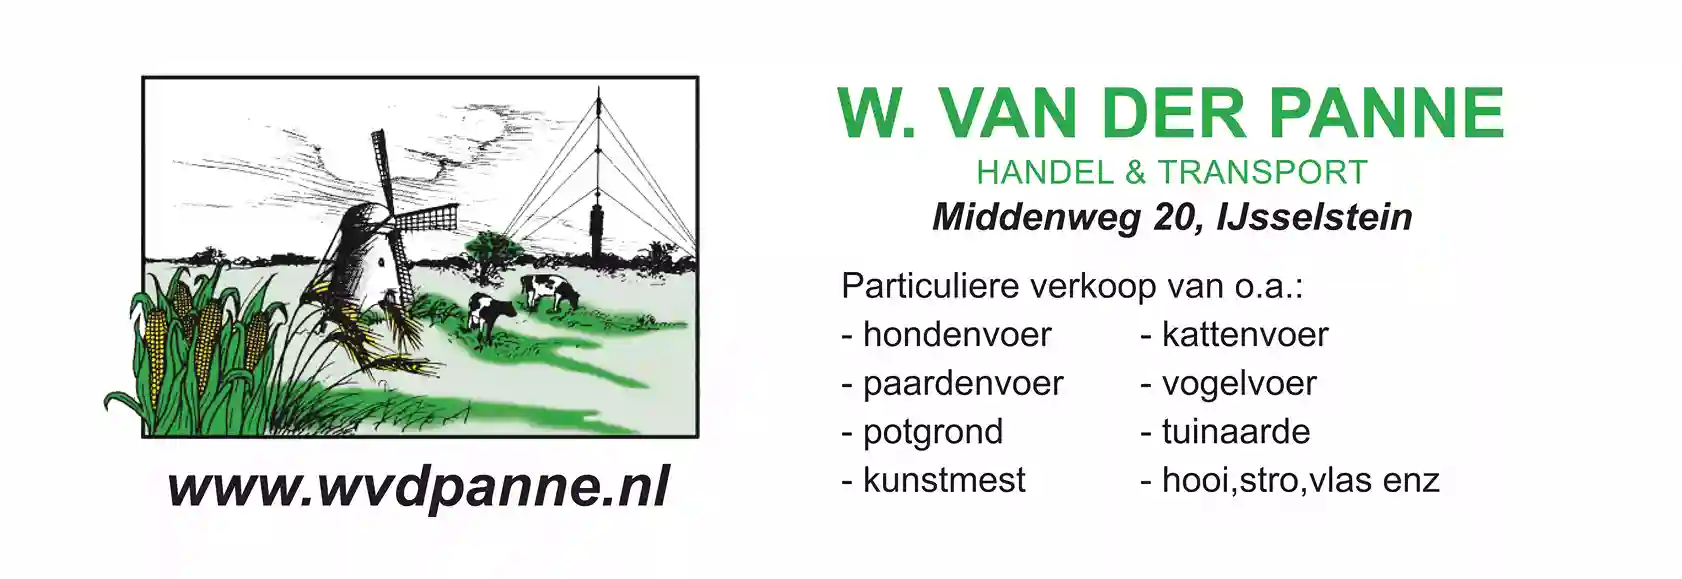 freecompress-W-van-der-panne-150x50